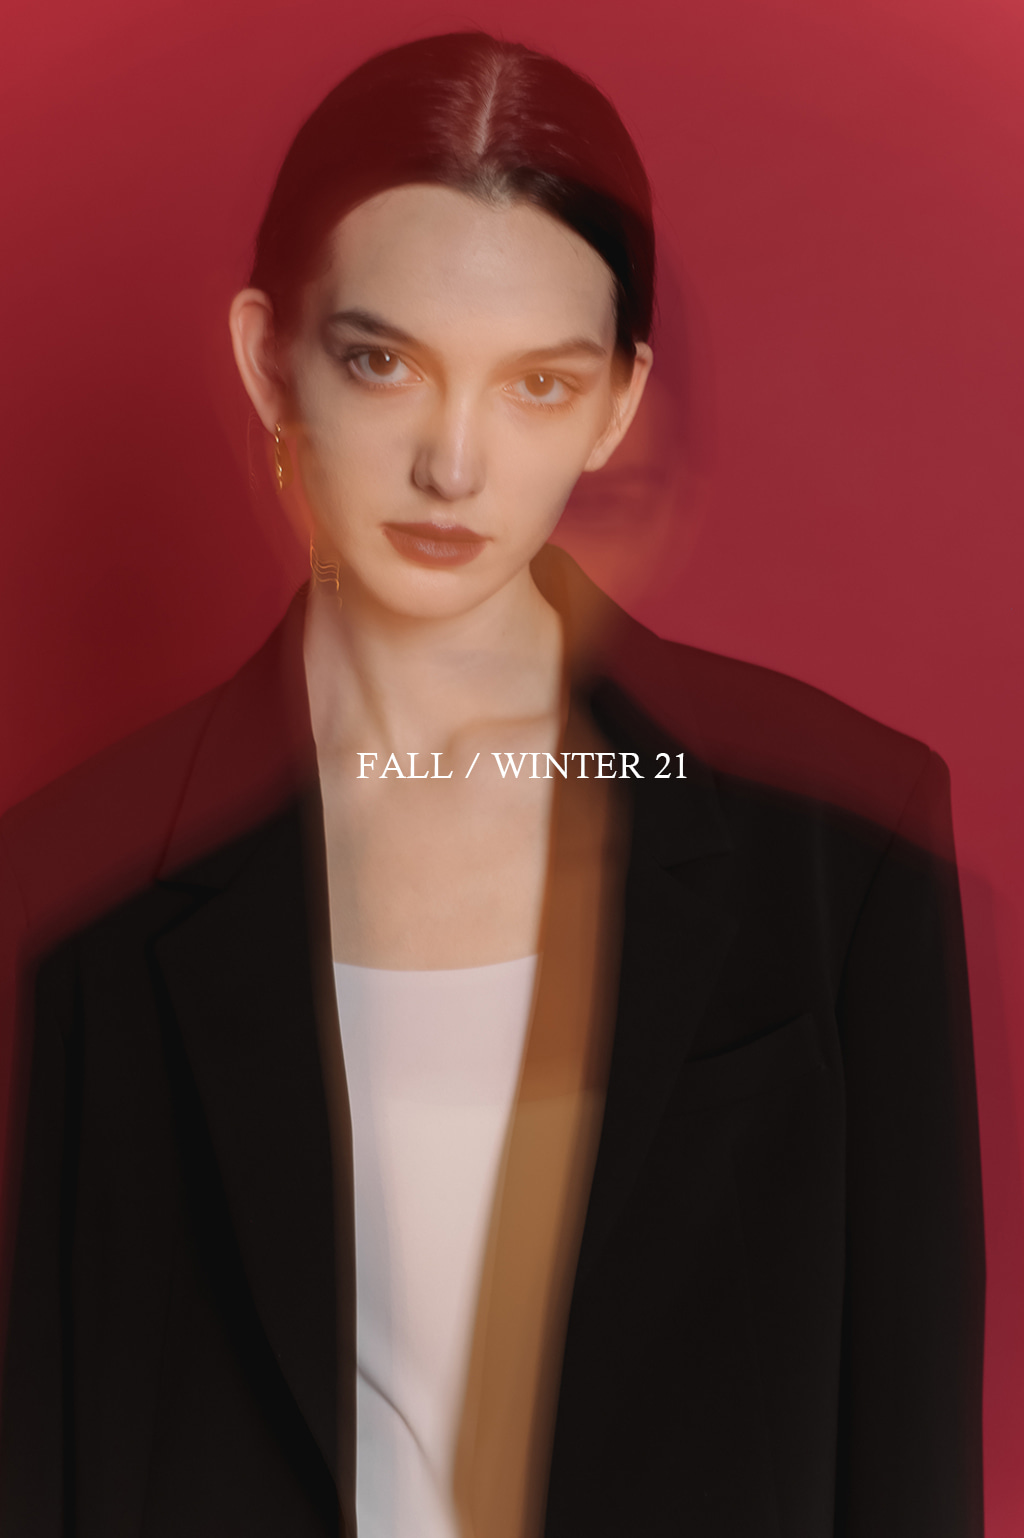 21 fall / winter